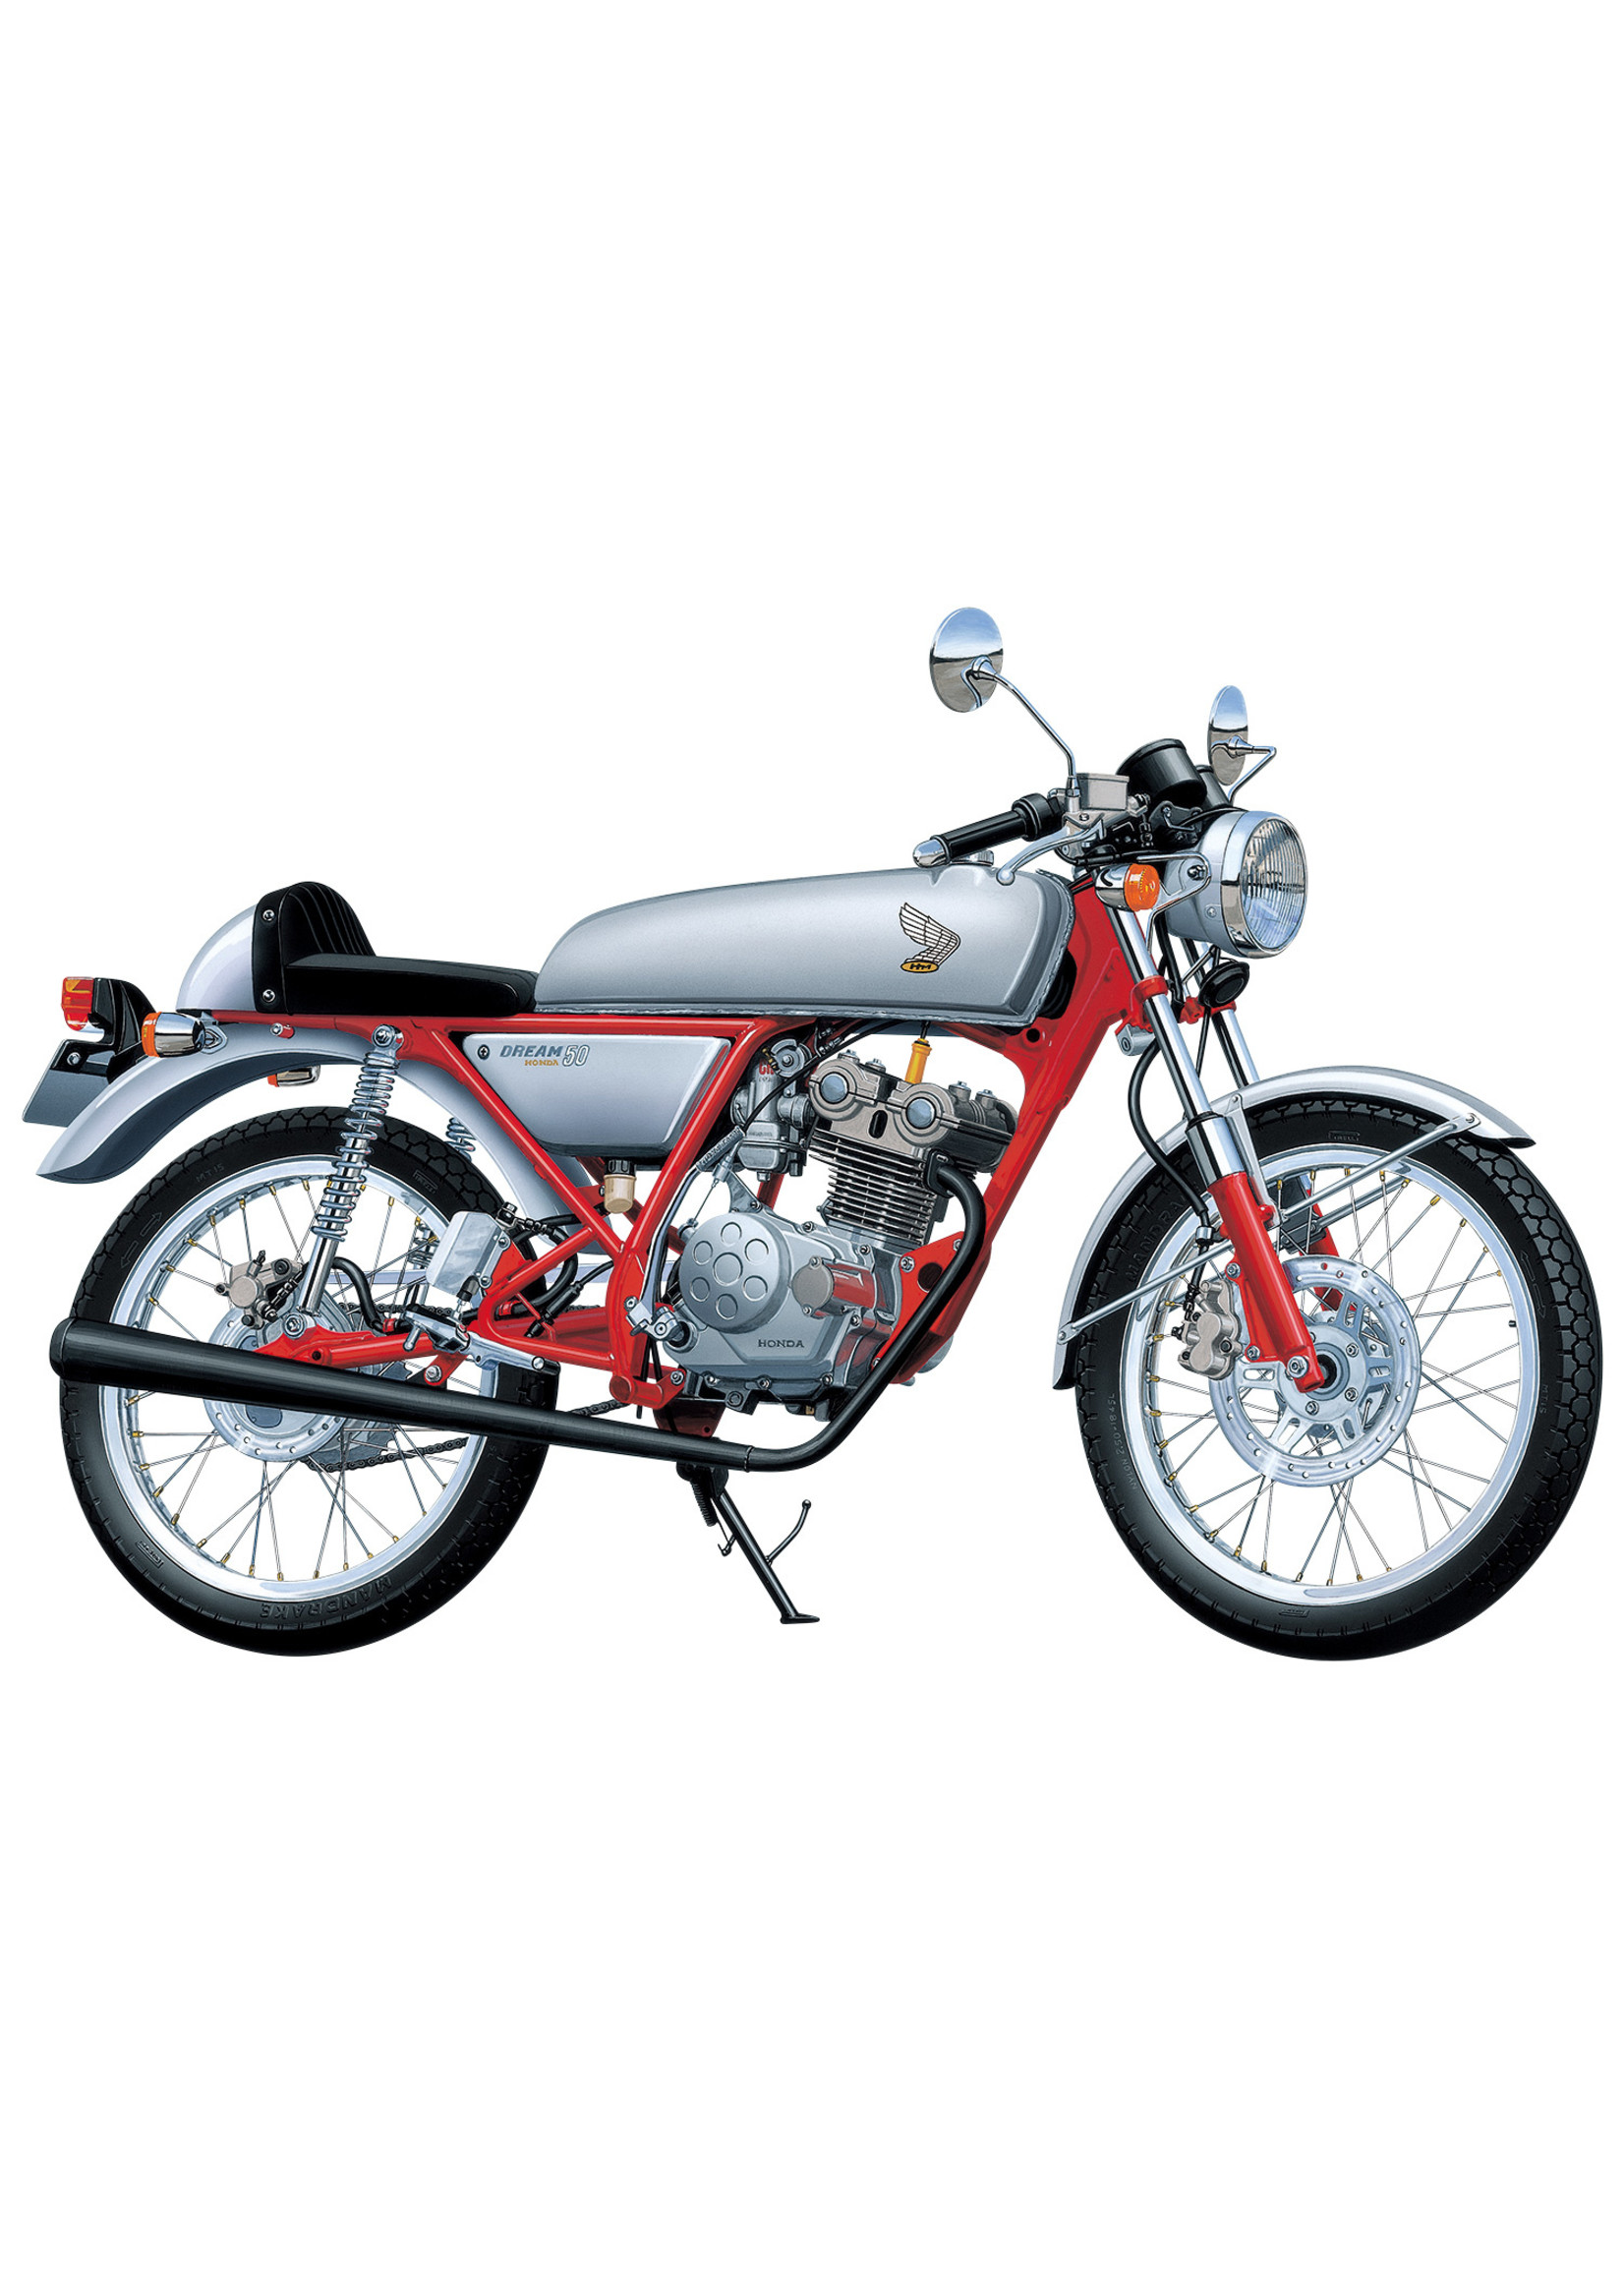 Aoshima 06295 - 1/12 1997 Honda Dream 50 Custom Motorcycle